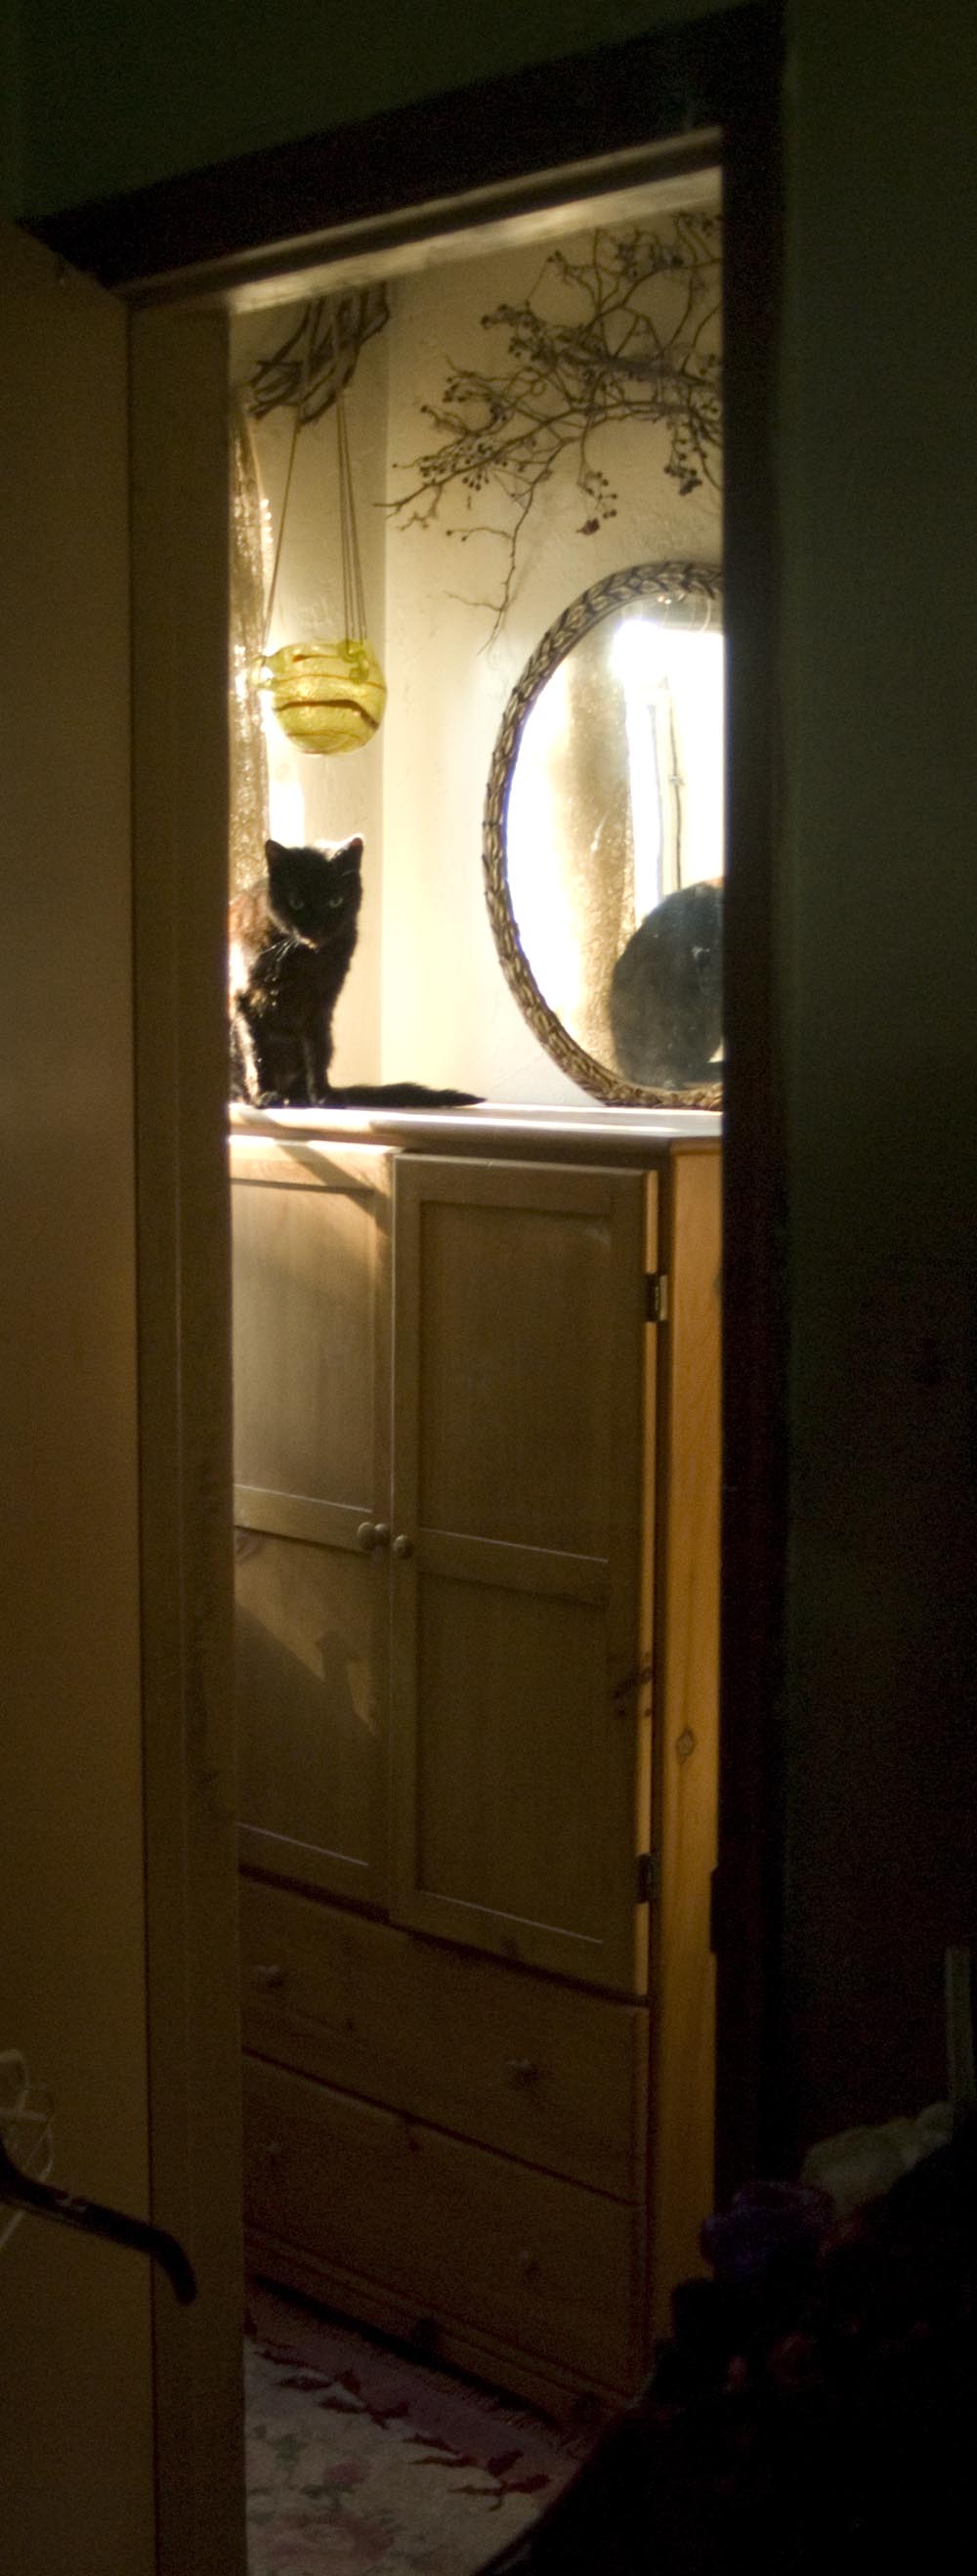 Black cat watching through doorway